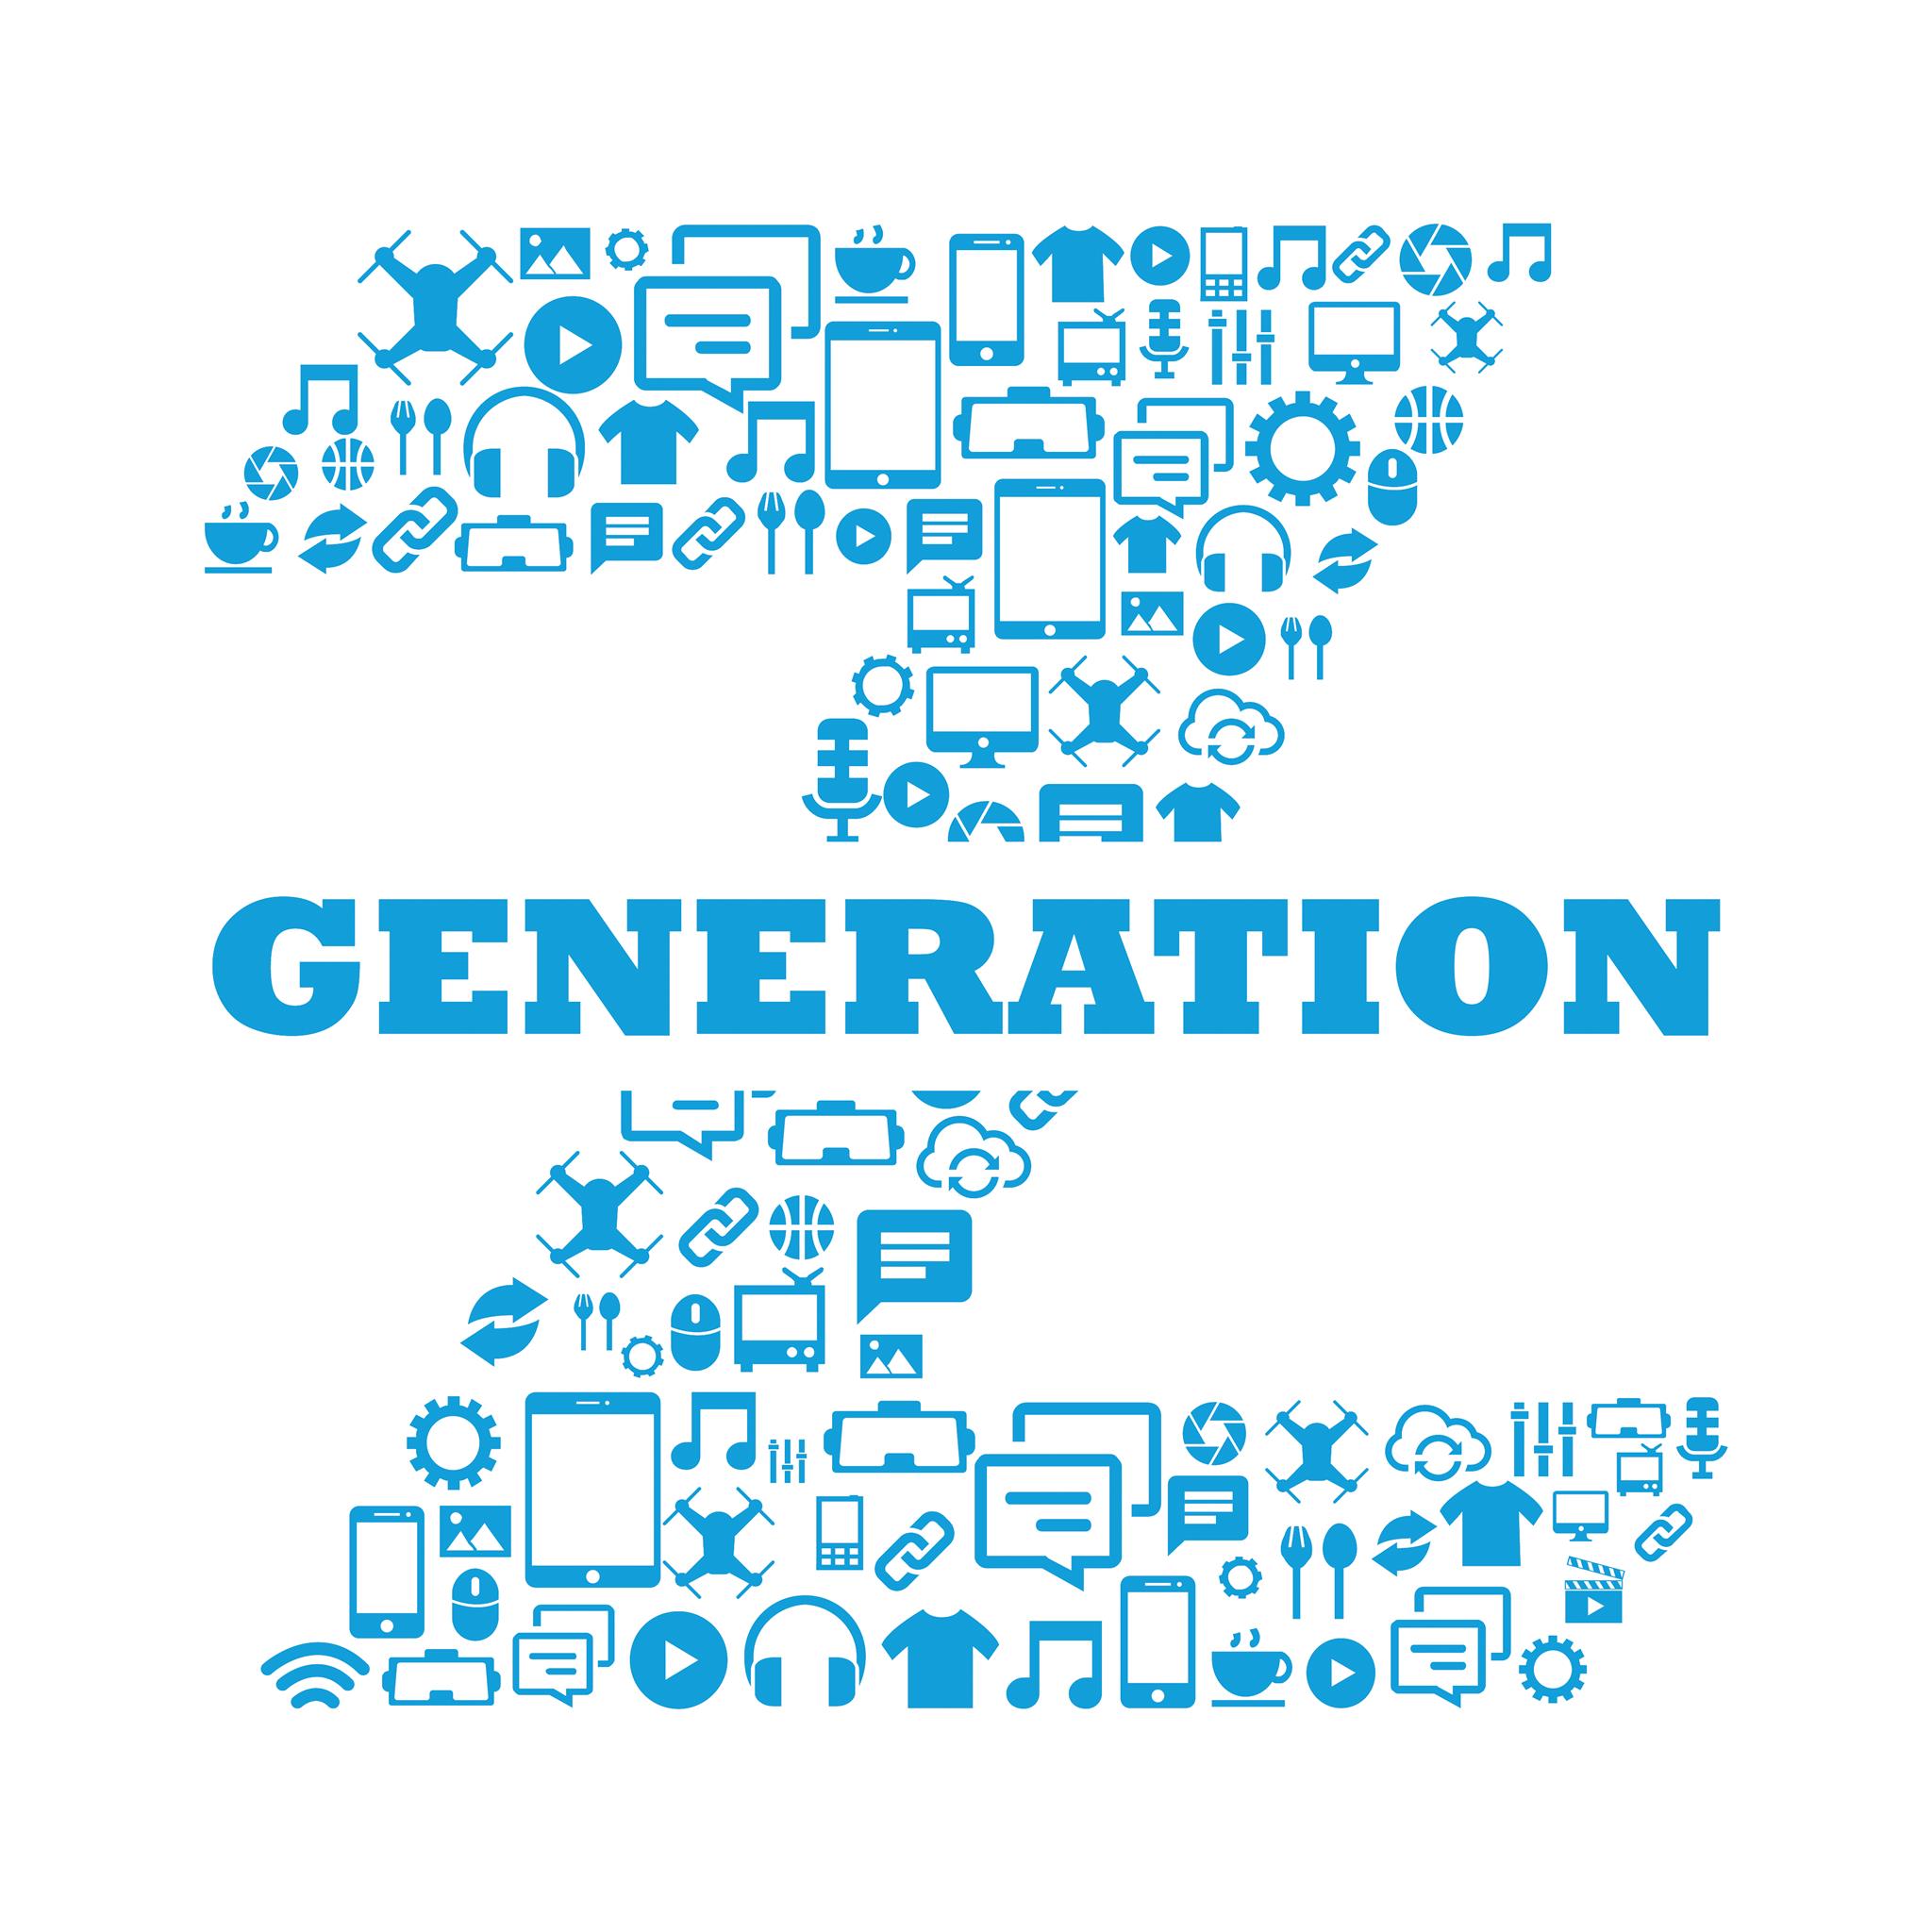 Empowering Generation Z through technology